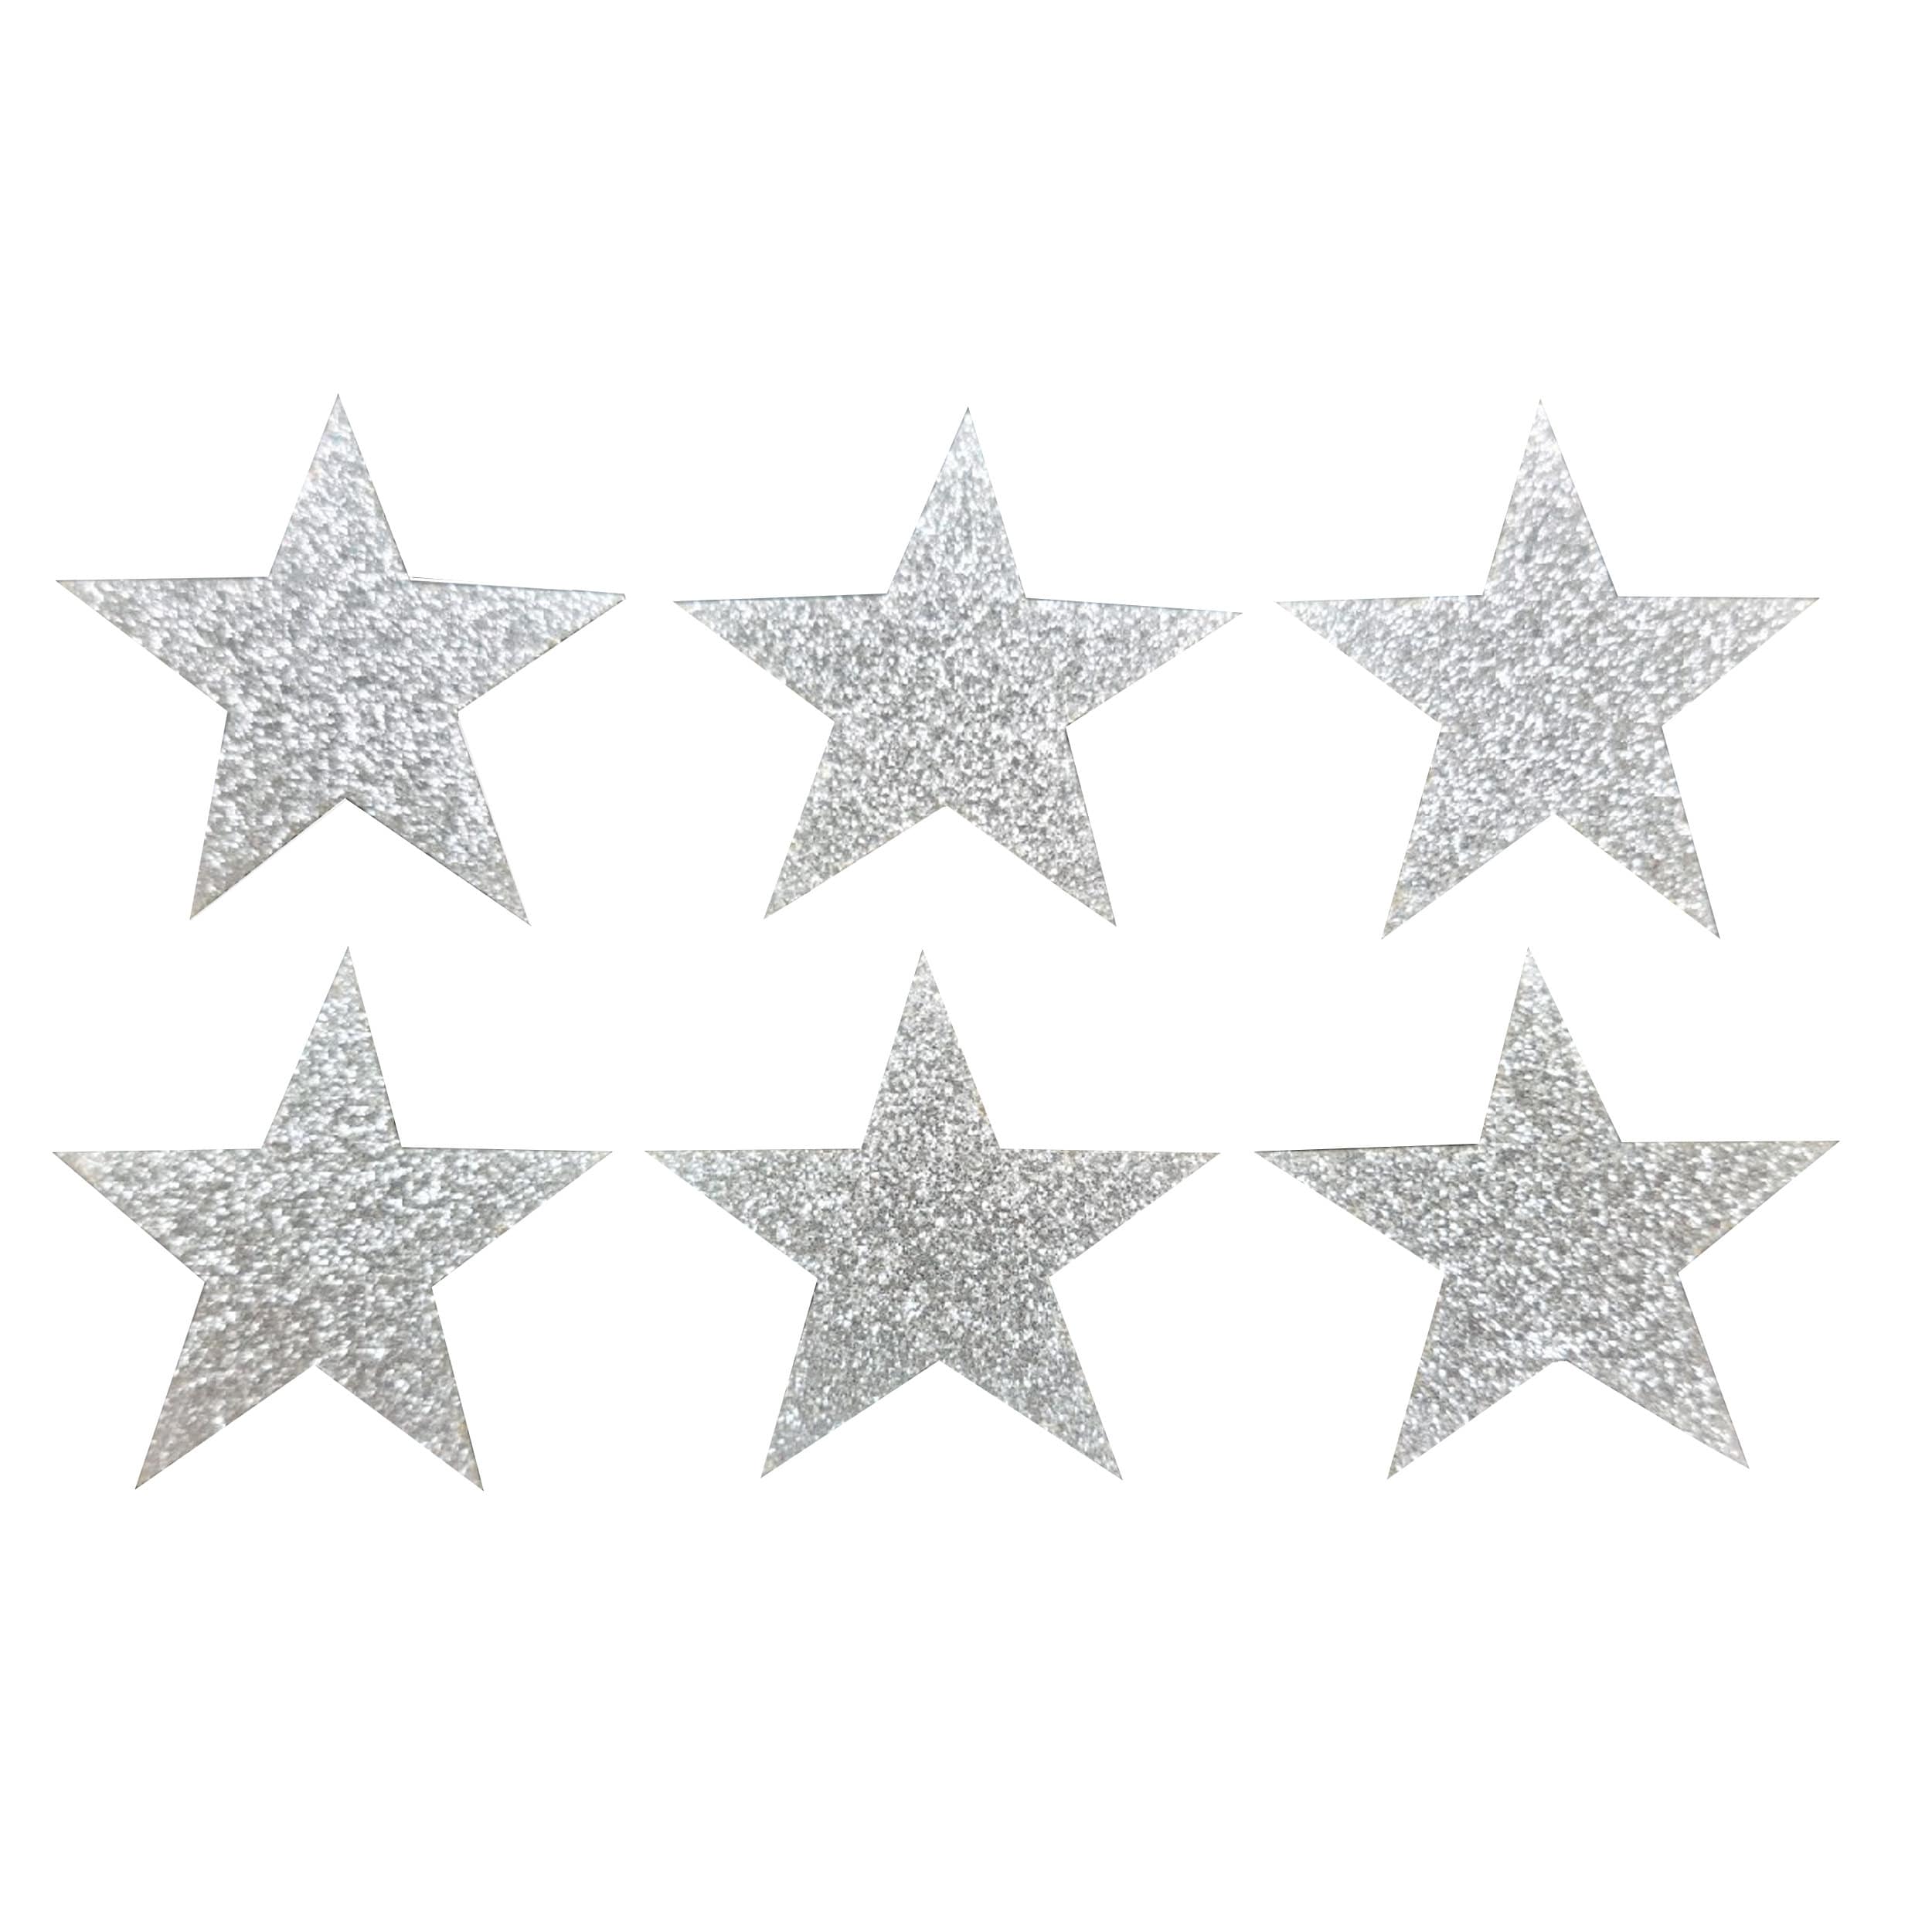 CrystalsRus Blue 48 Fabric Glitter Stars 1 Inch 25mm Iron-On Fabric Transfer